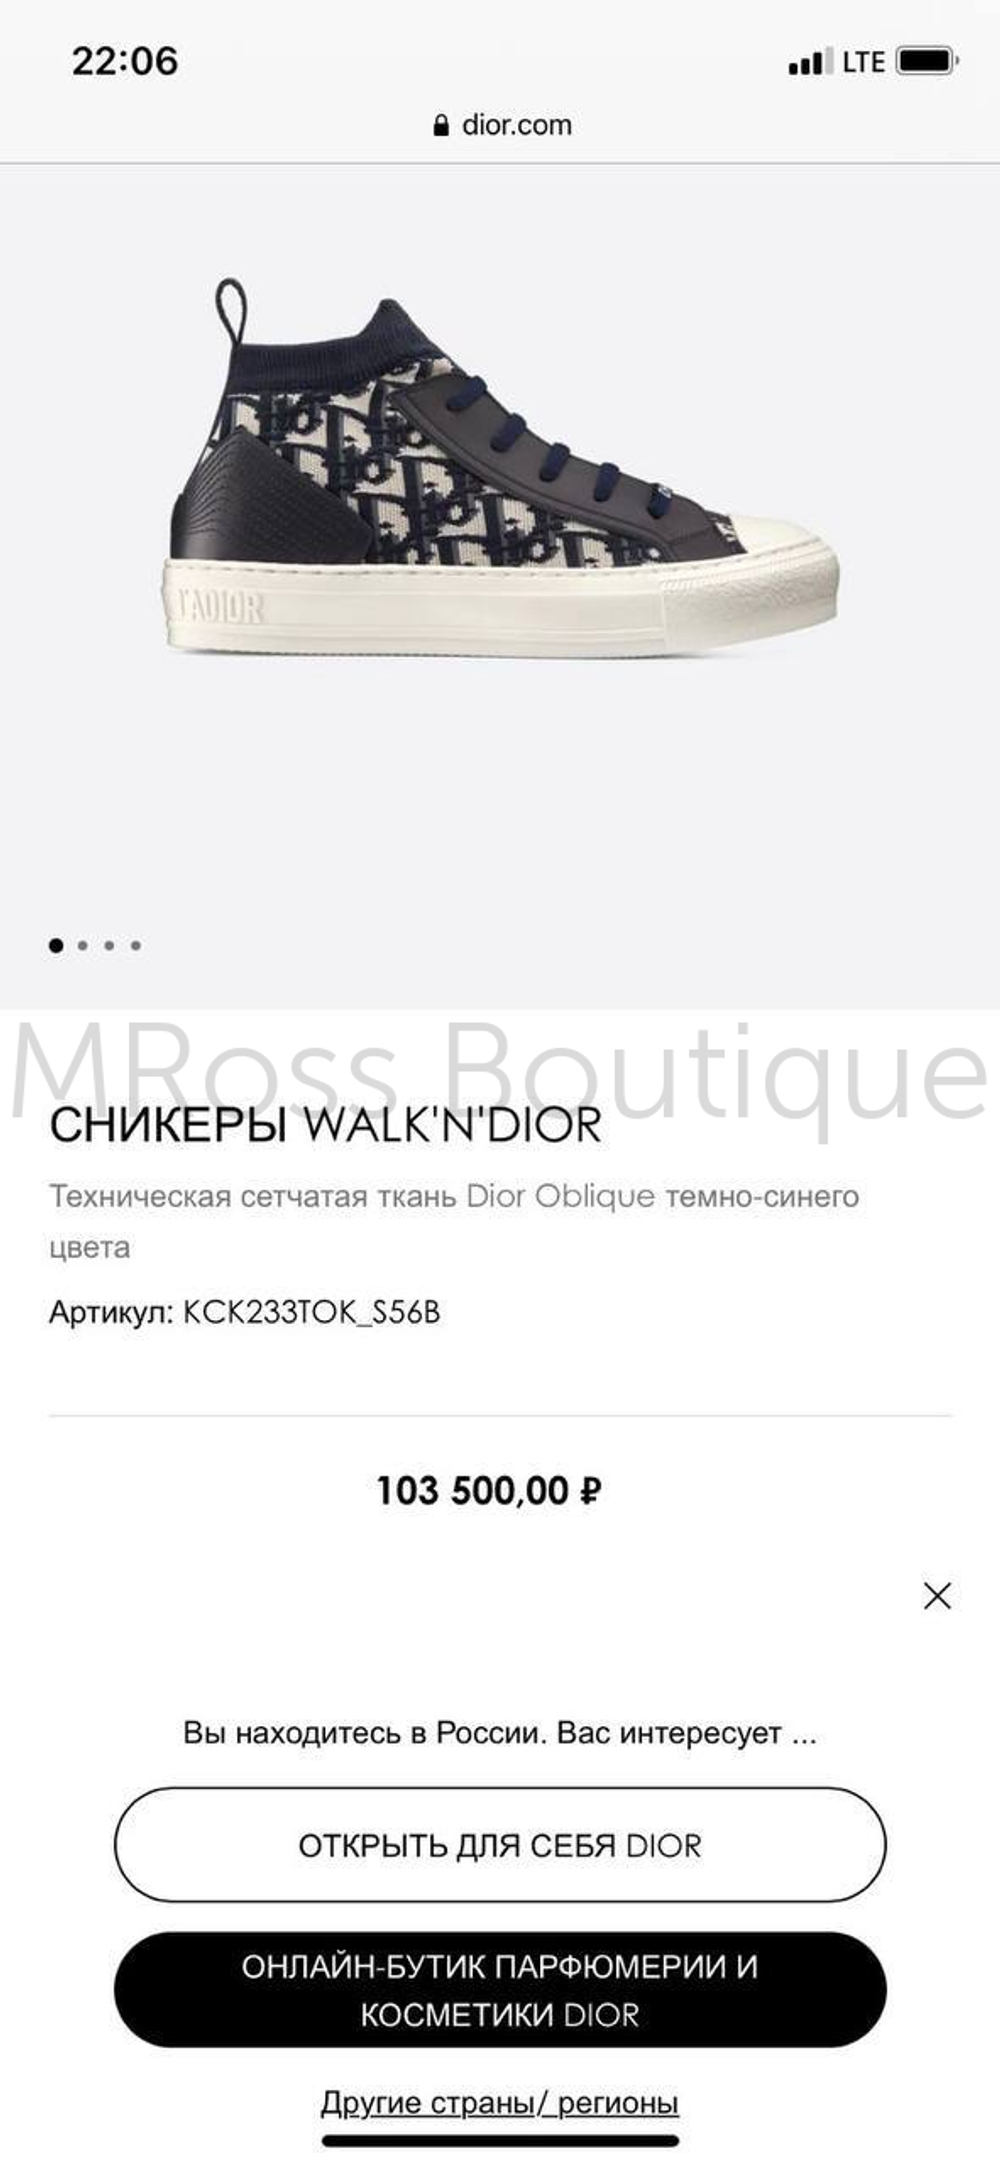 Кроссовки Walk'n'Dior (Диор) премиум класса